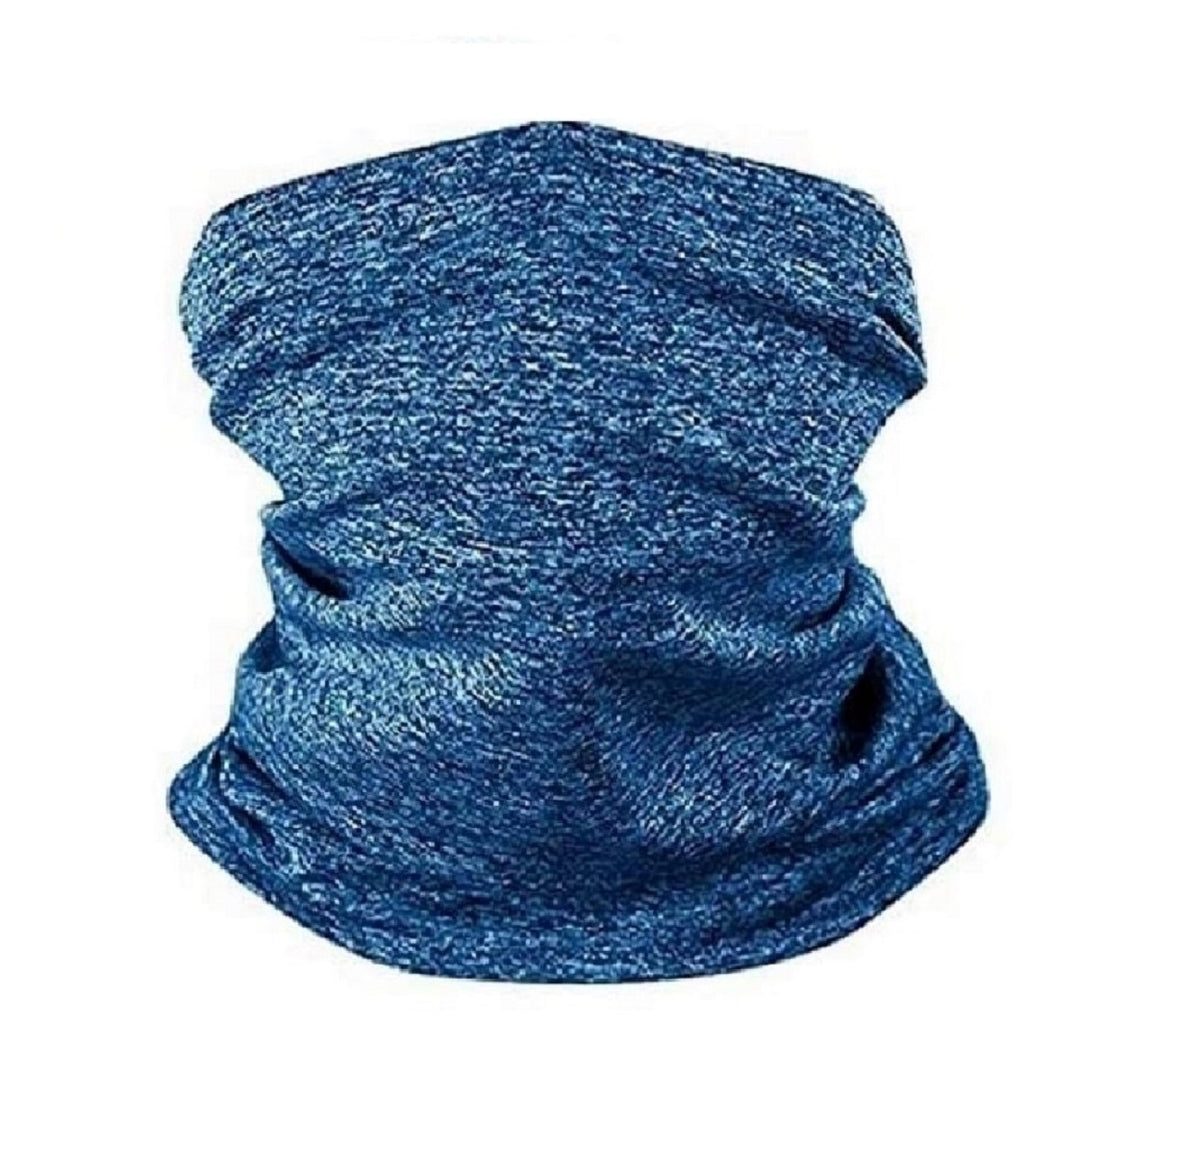 Magic Headwear Amazing Blue Trippy Outdoor Scarf Headbands Bandana Mask Neck Gaiter Head Wrap Mask Sweatband